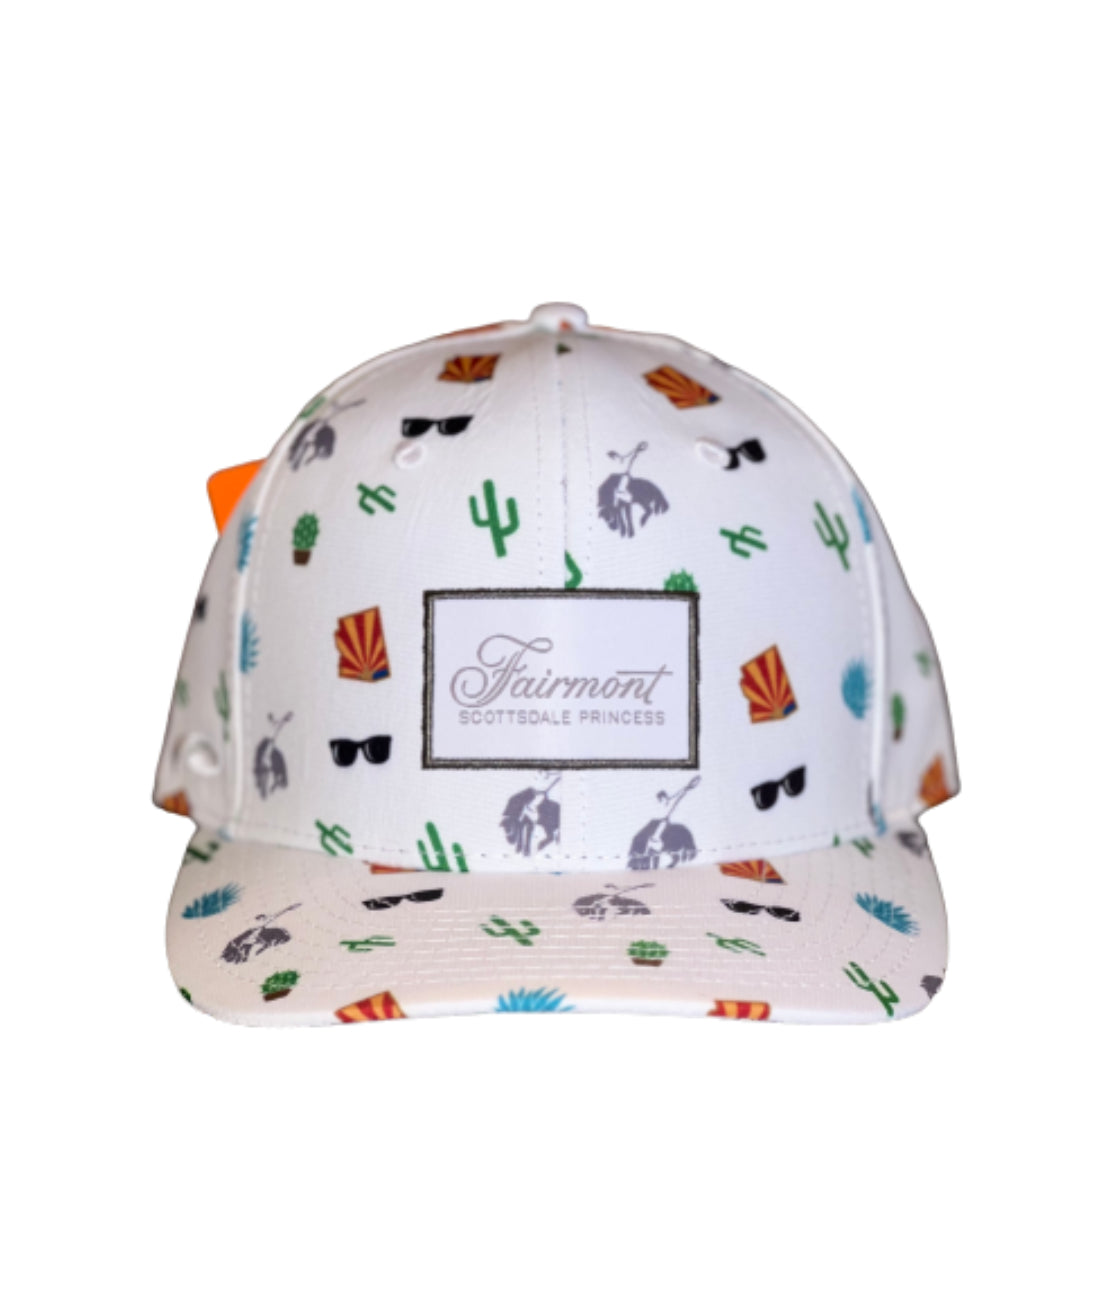 White Icon Patterned Fairmont Scottsdale Princess Logo Hat